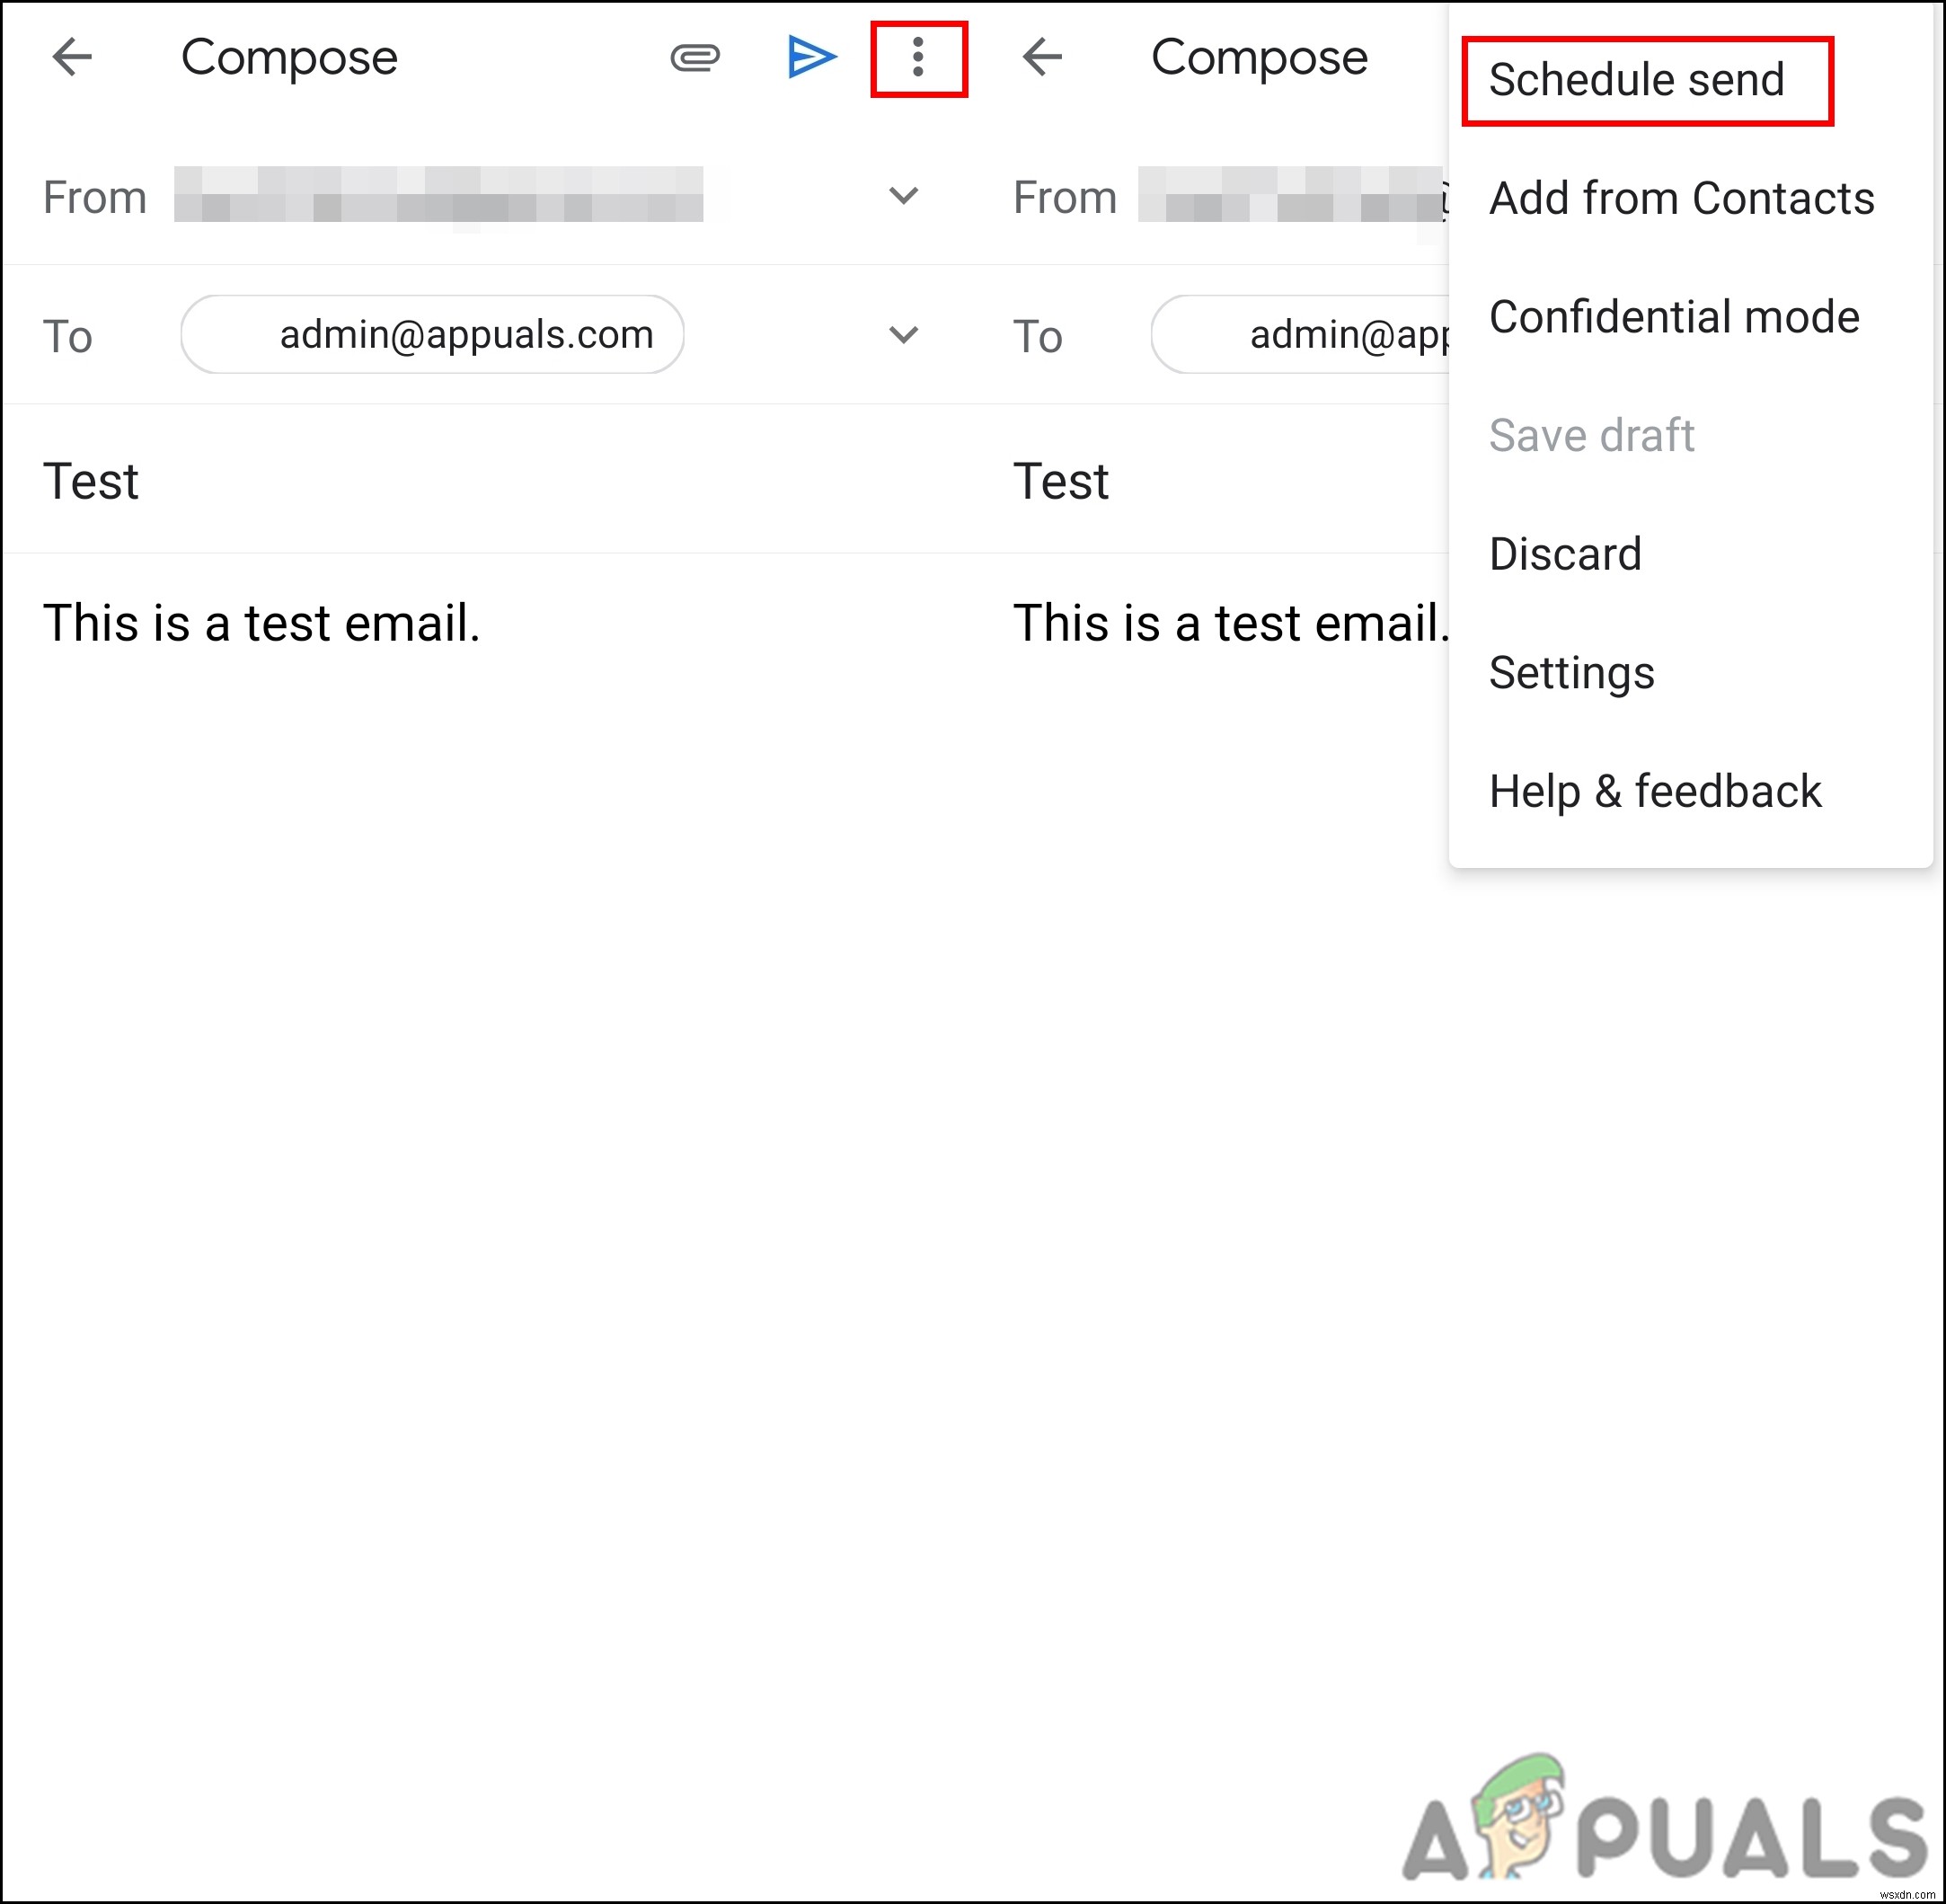 Gmail에서 이메일 보내기를 예약하는 방법은 무엇입니까? 